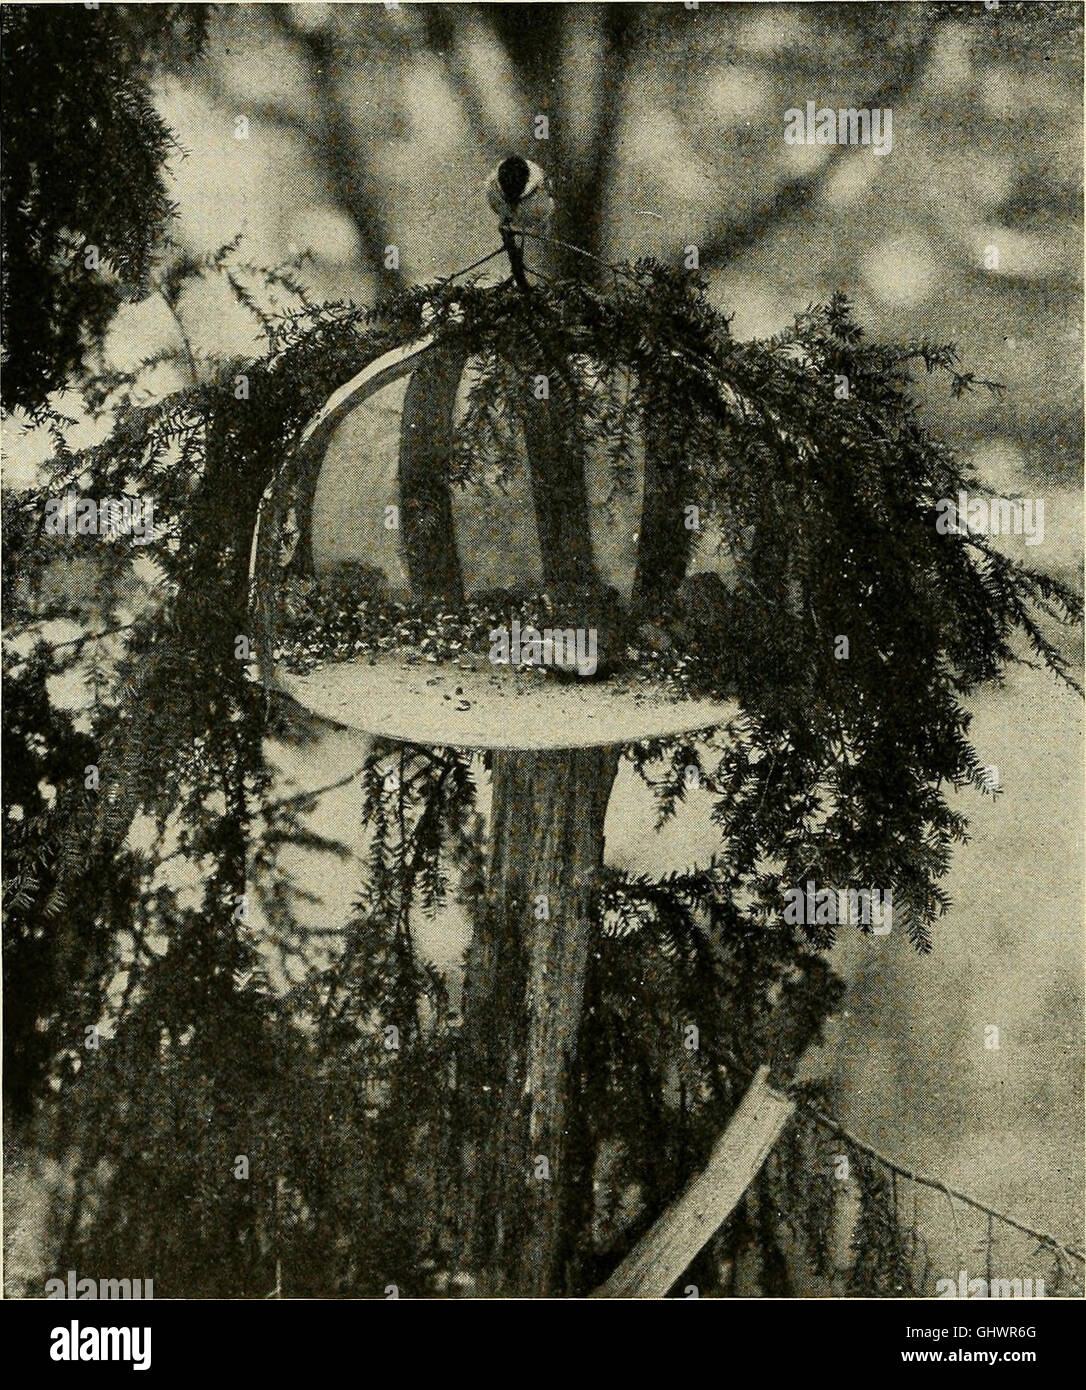 Bird lore (1919) Stock Photo